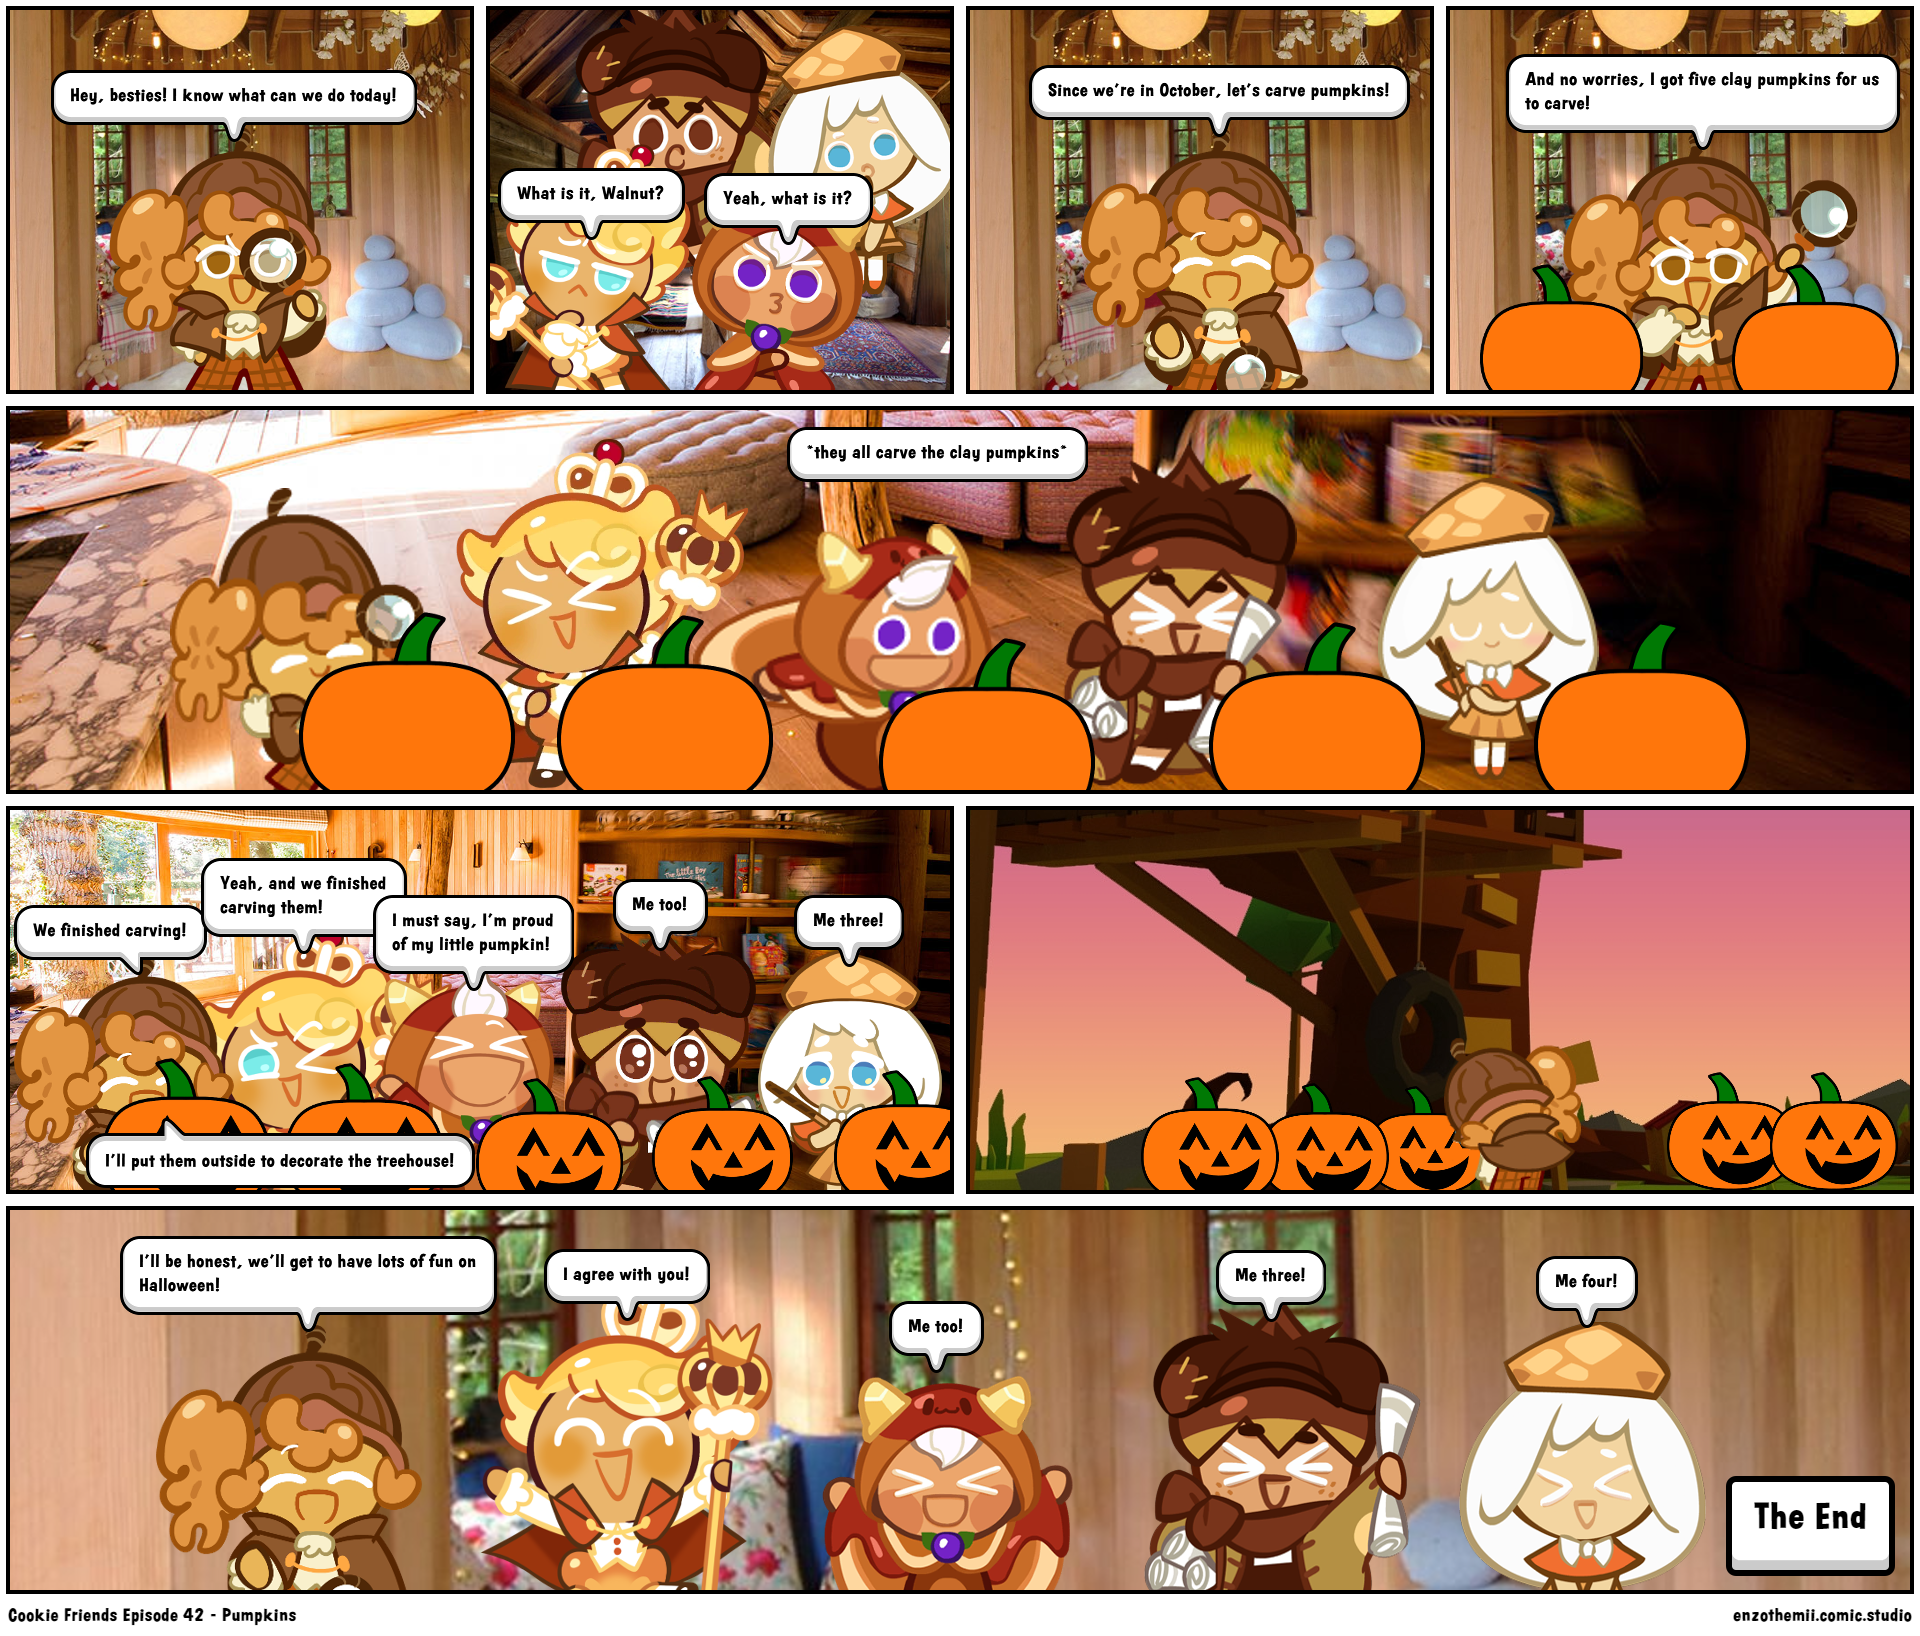 Cookie Friends Episode 42 - Pumpkins